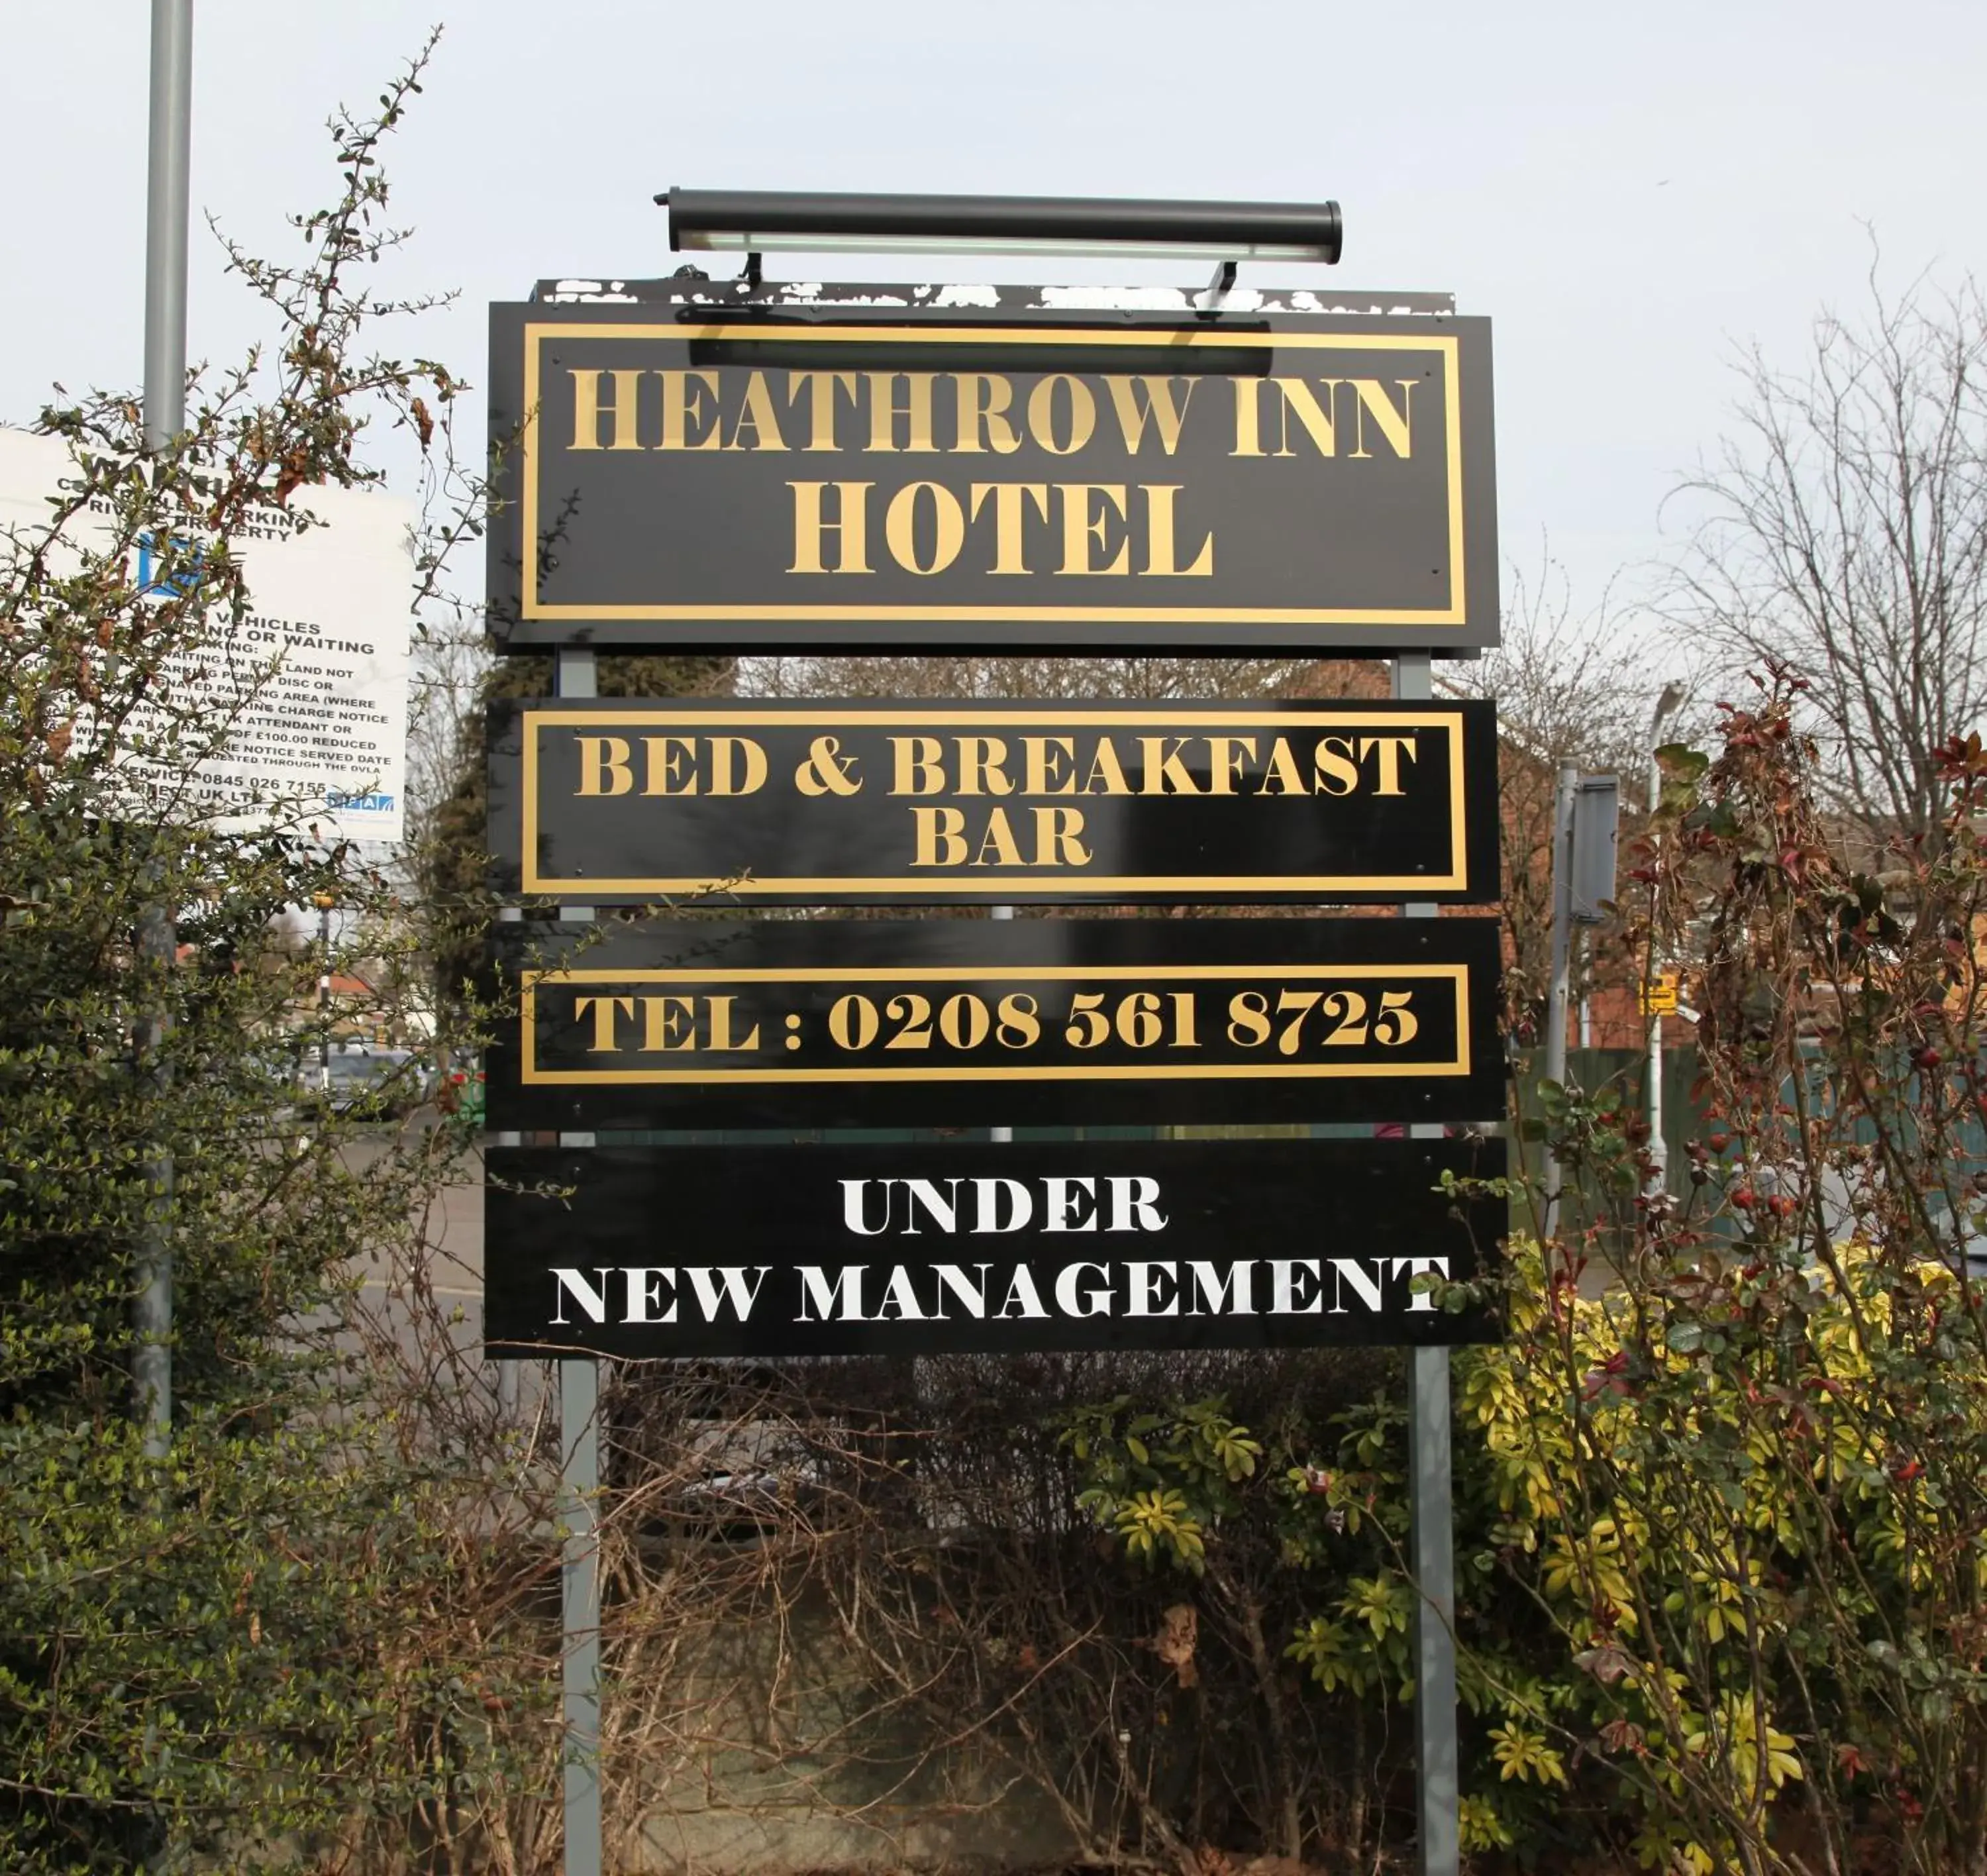 Property logo or sign in Heathrow Inn Hotel